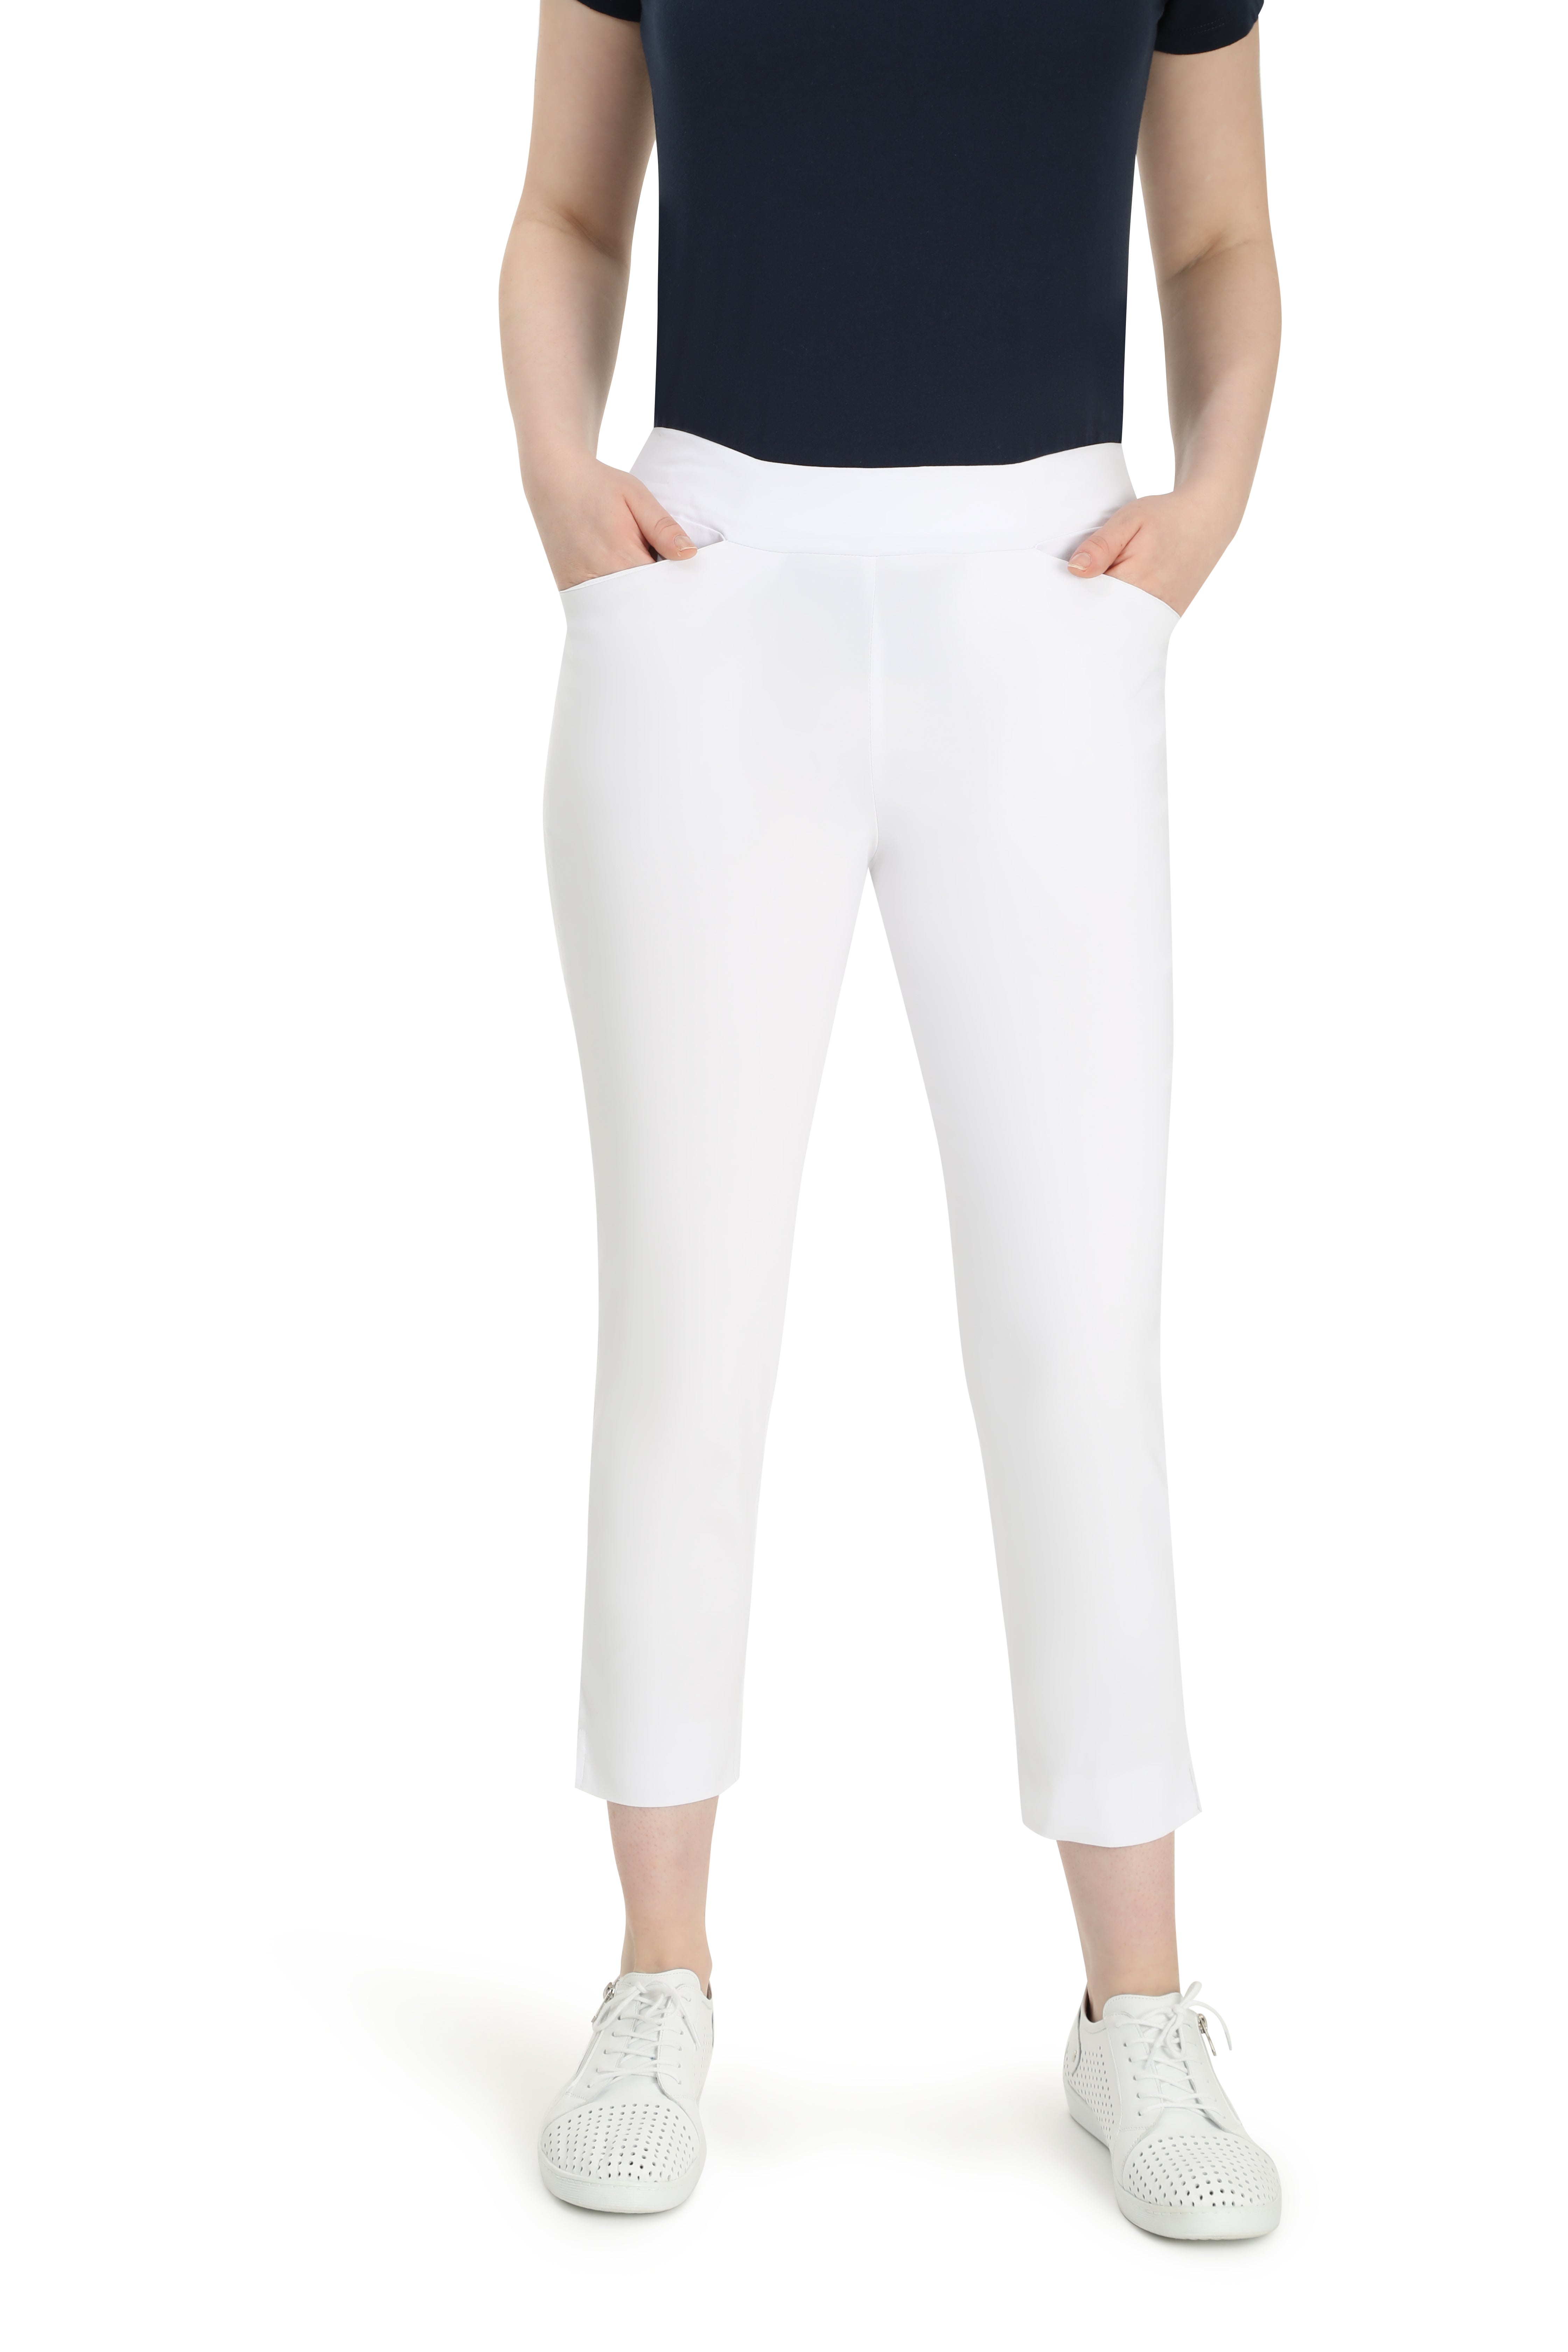 White Fringe Straight Leg Capris: Women's White Cotton Capri PantsPlatt  Designs